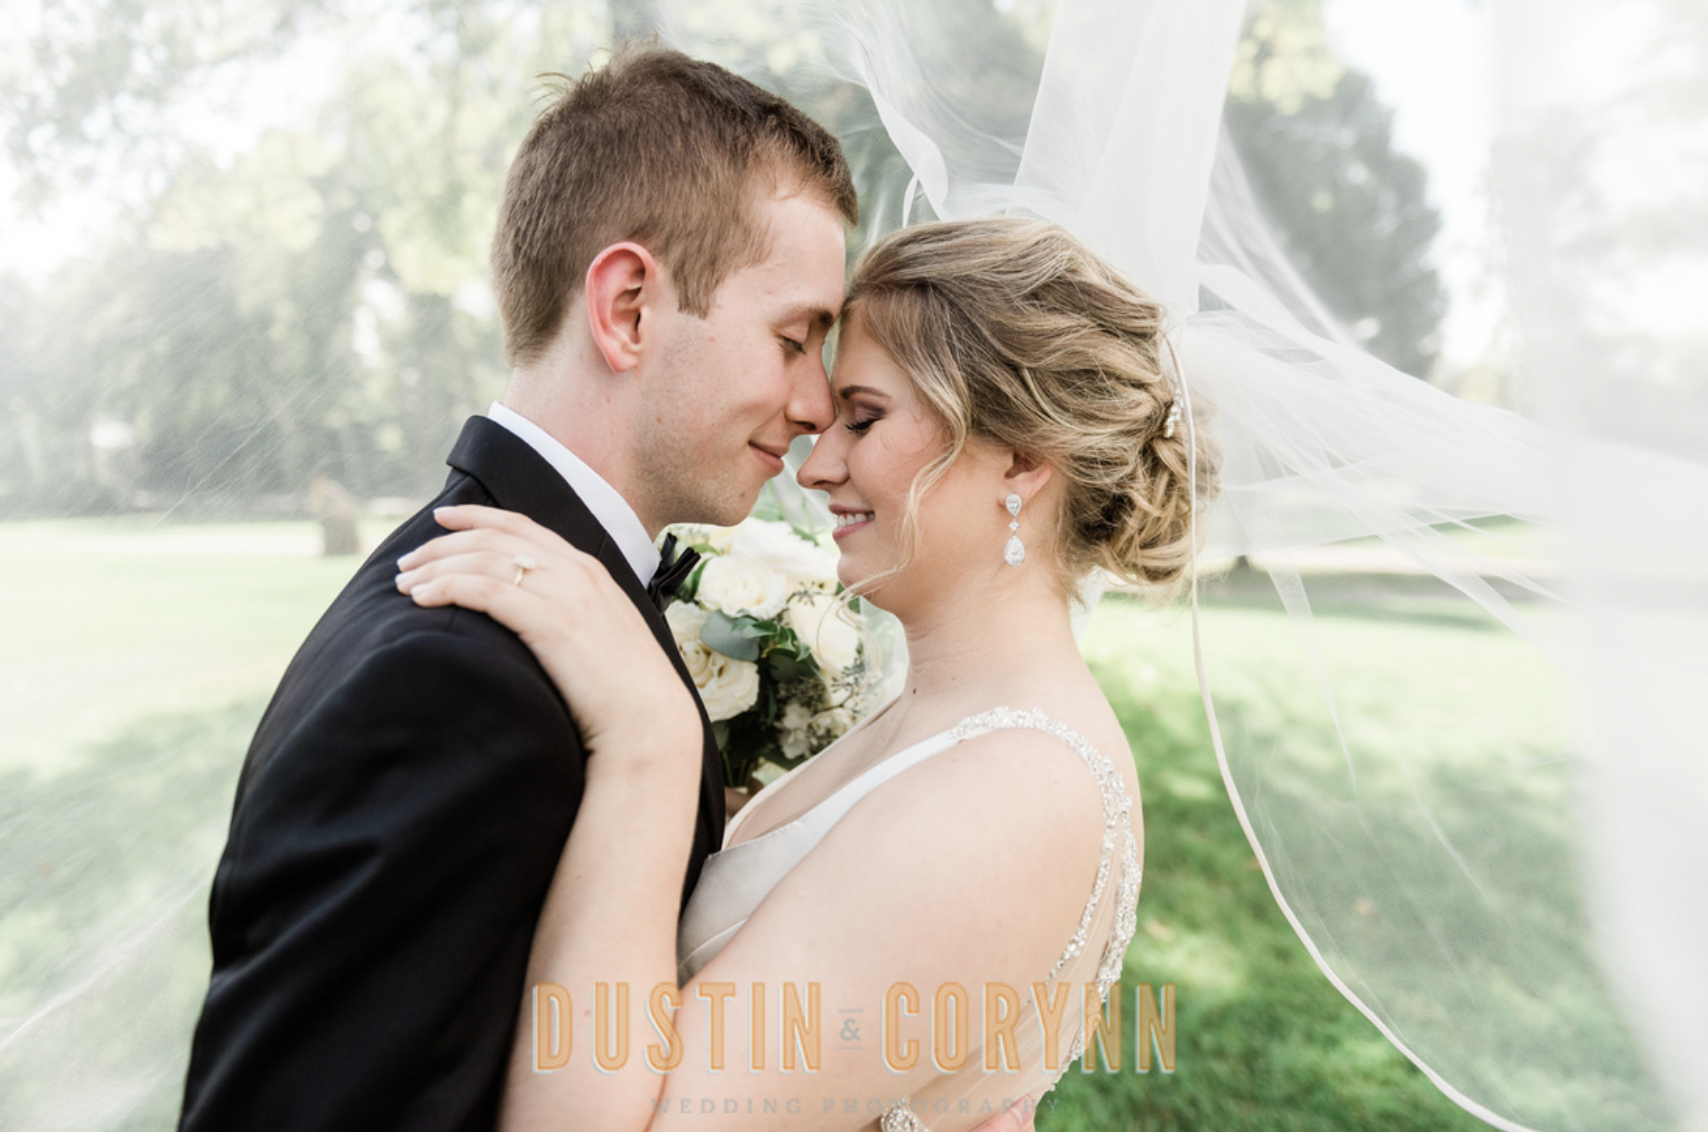 Indiana wedding photographer captures bride and groom nose to nose under bridal veil